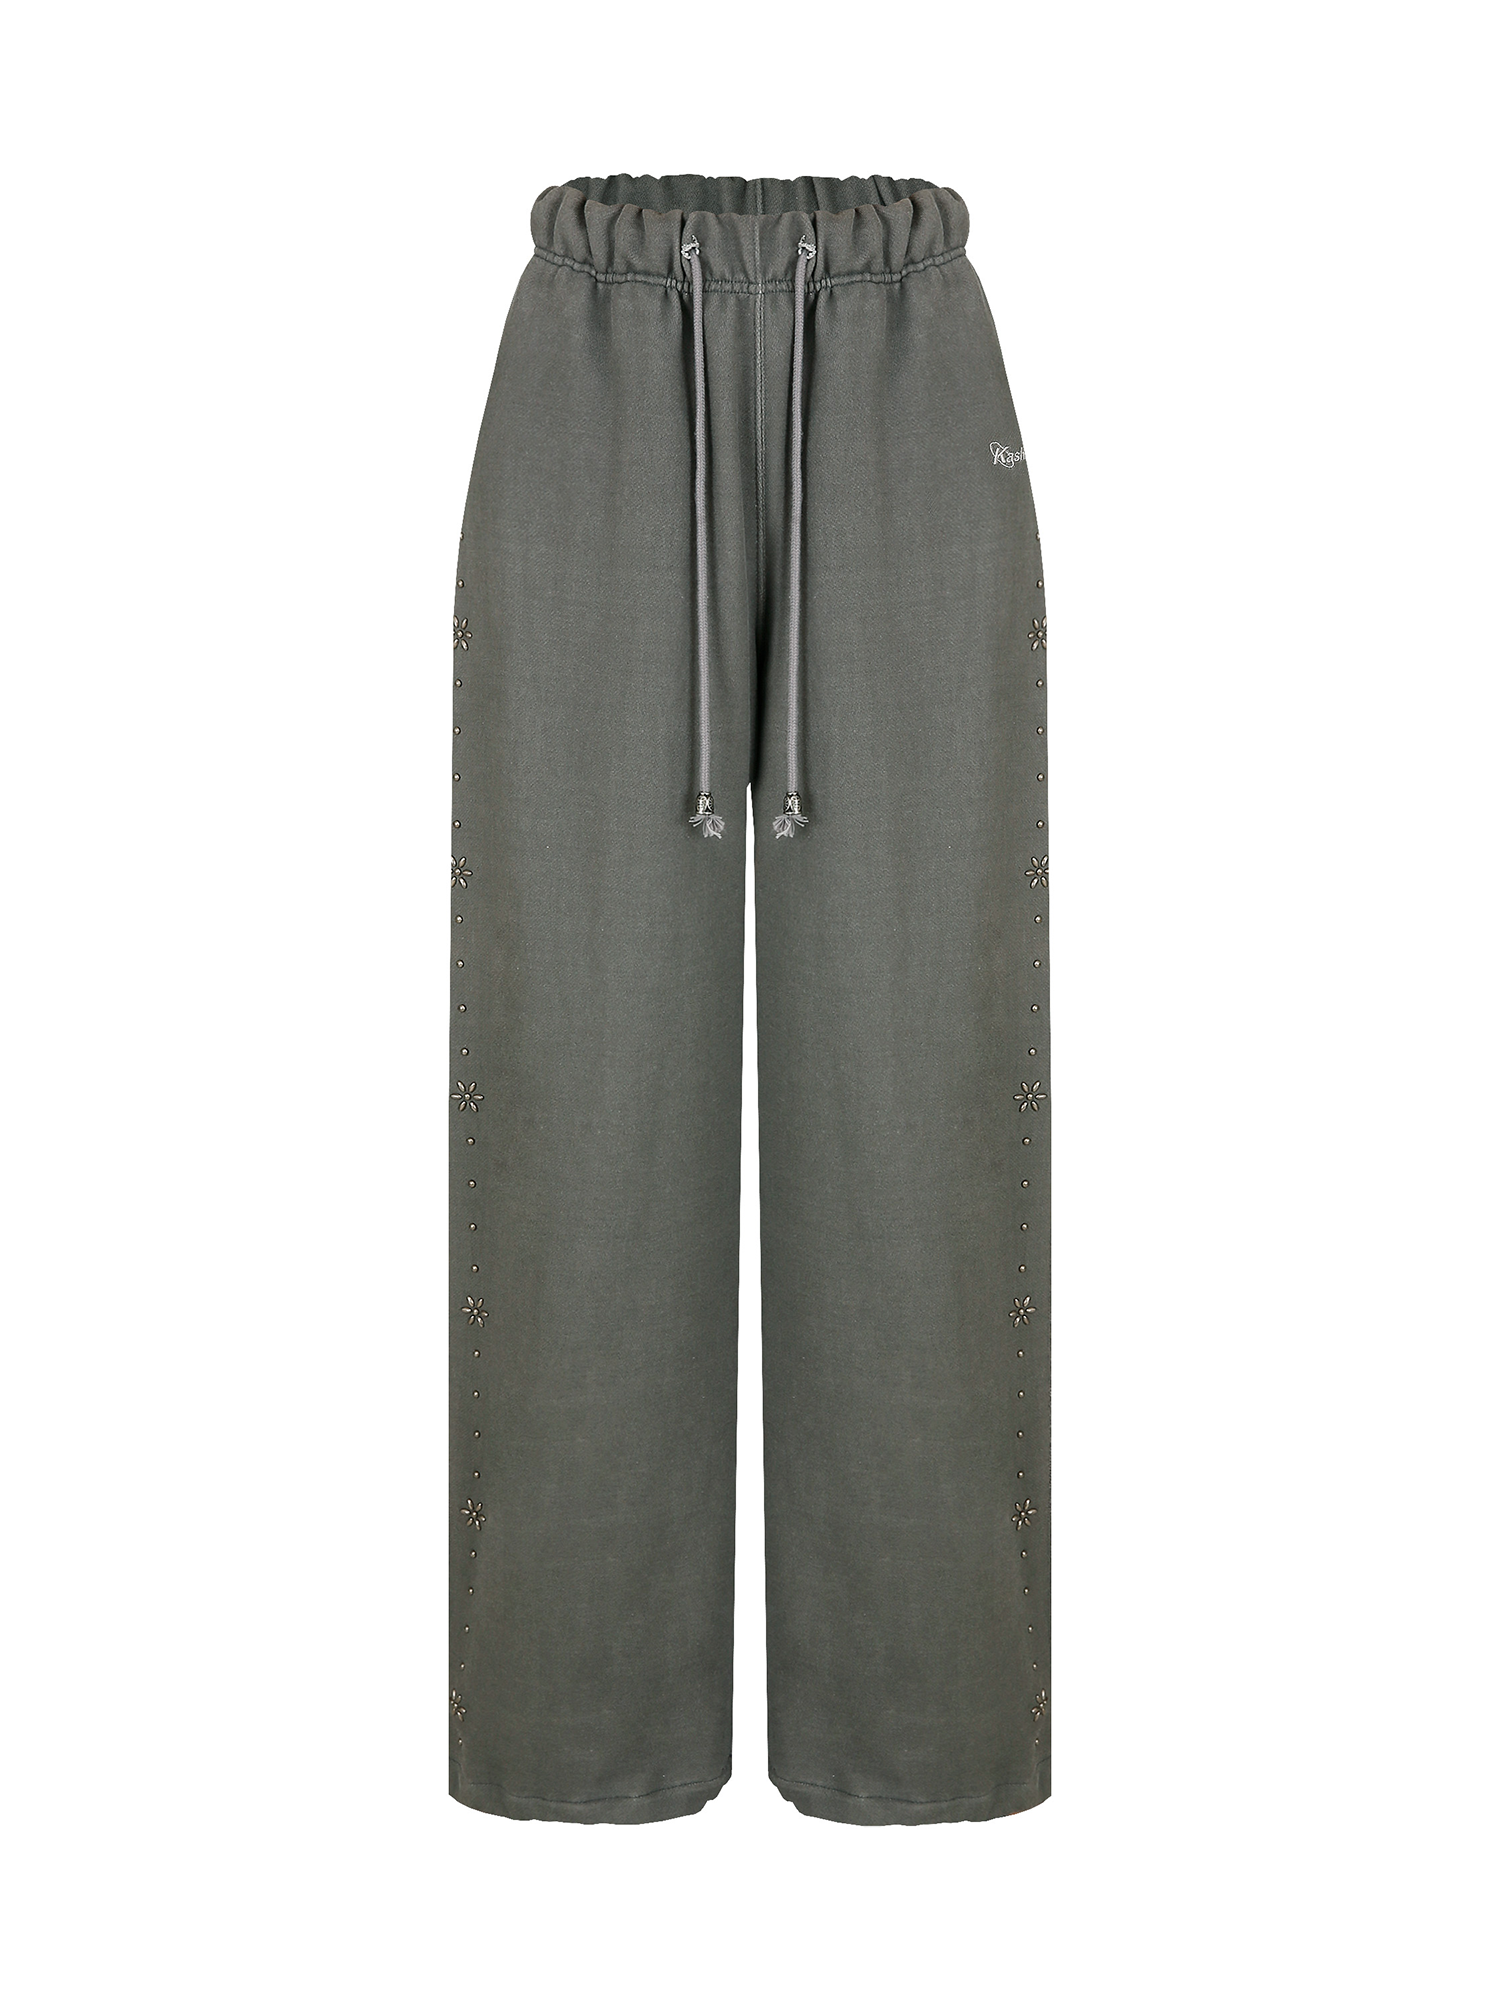 Kashiko Comfy : Monk Trousers